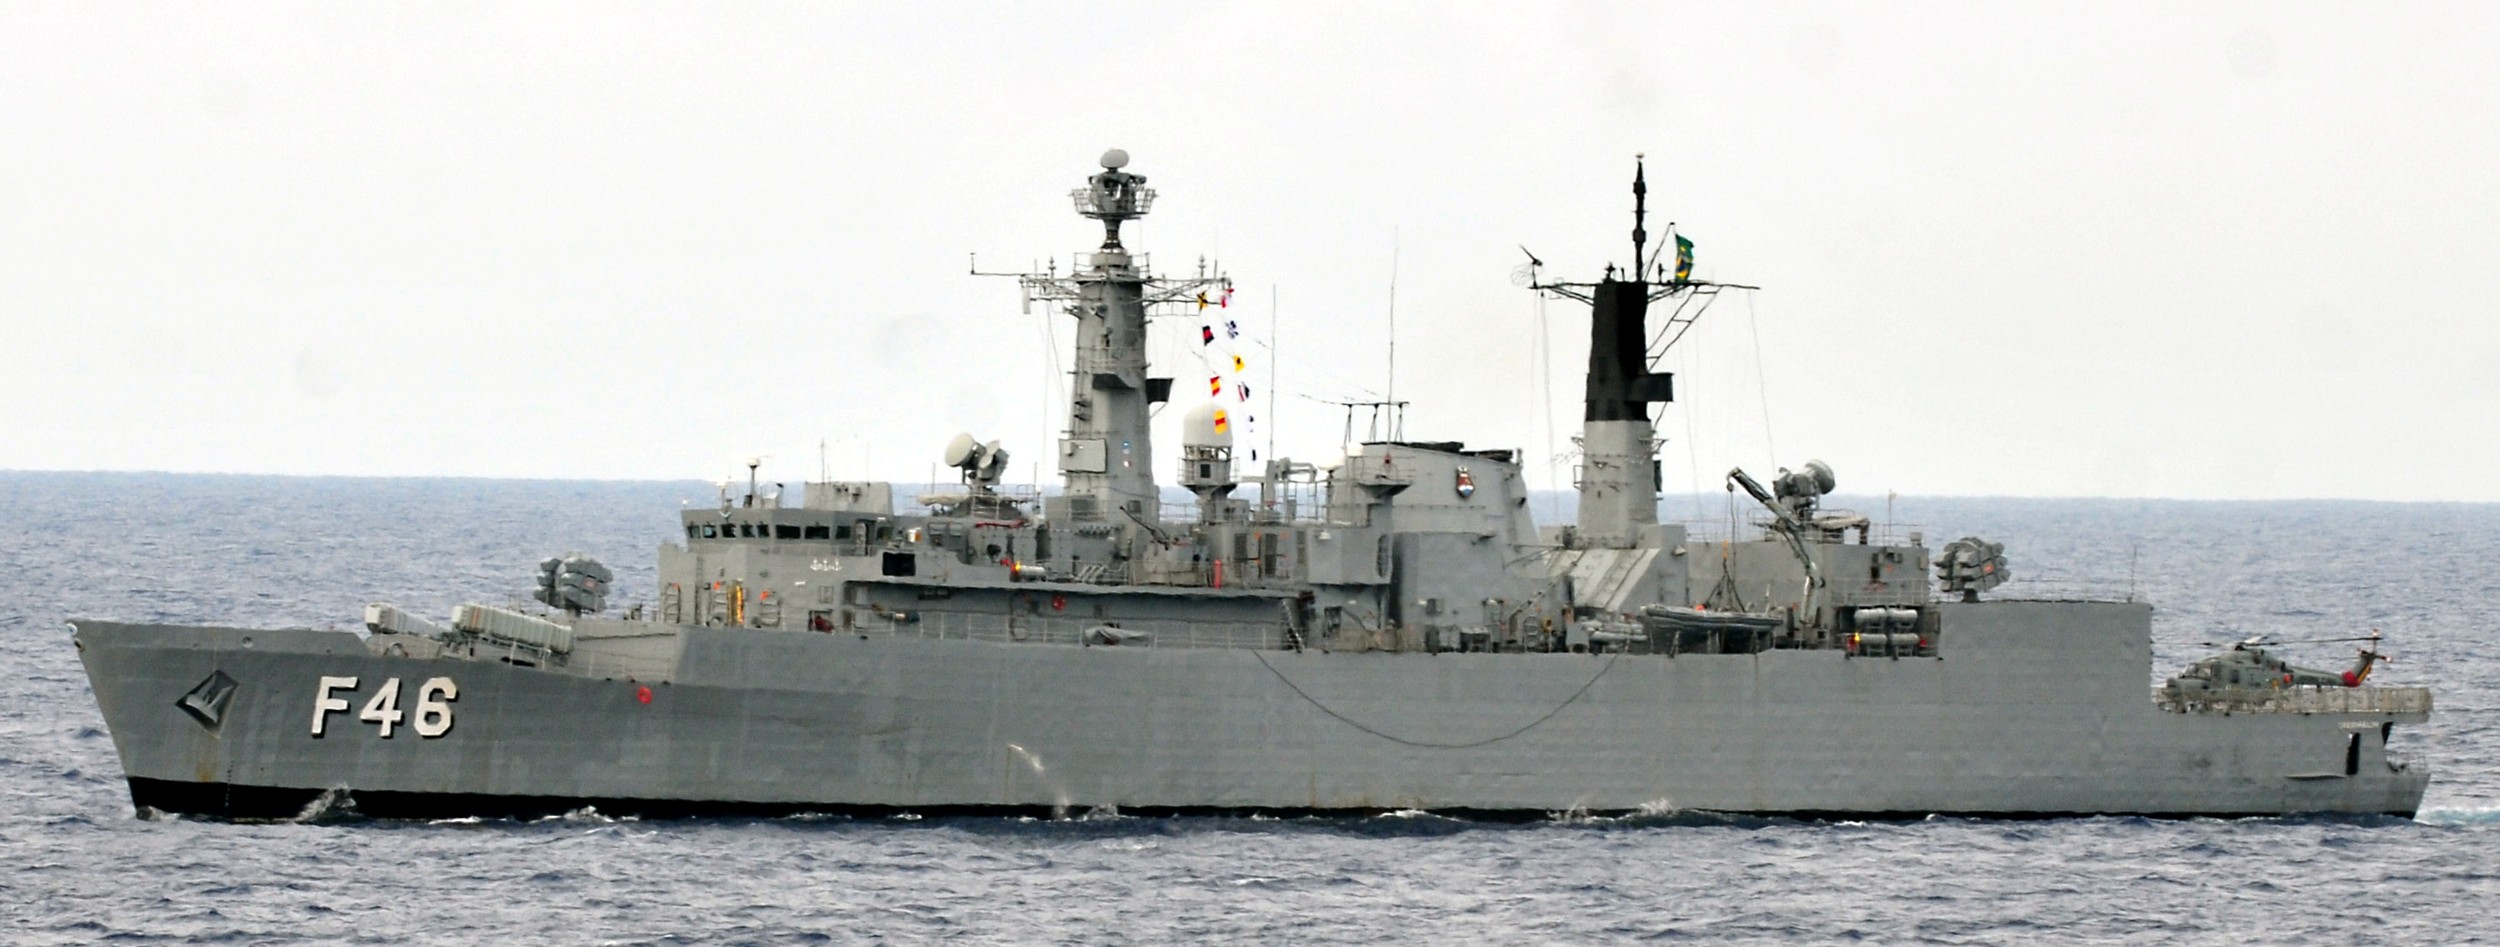 f 46 greenhalgh type 22 frigate brazilian navy ex hms broadsword f88